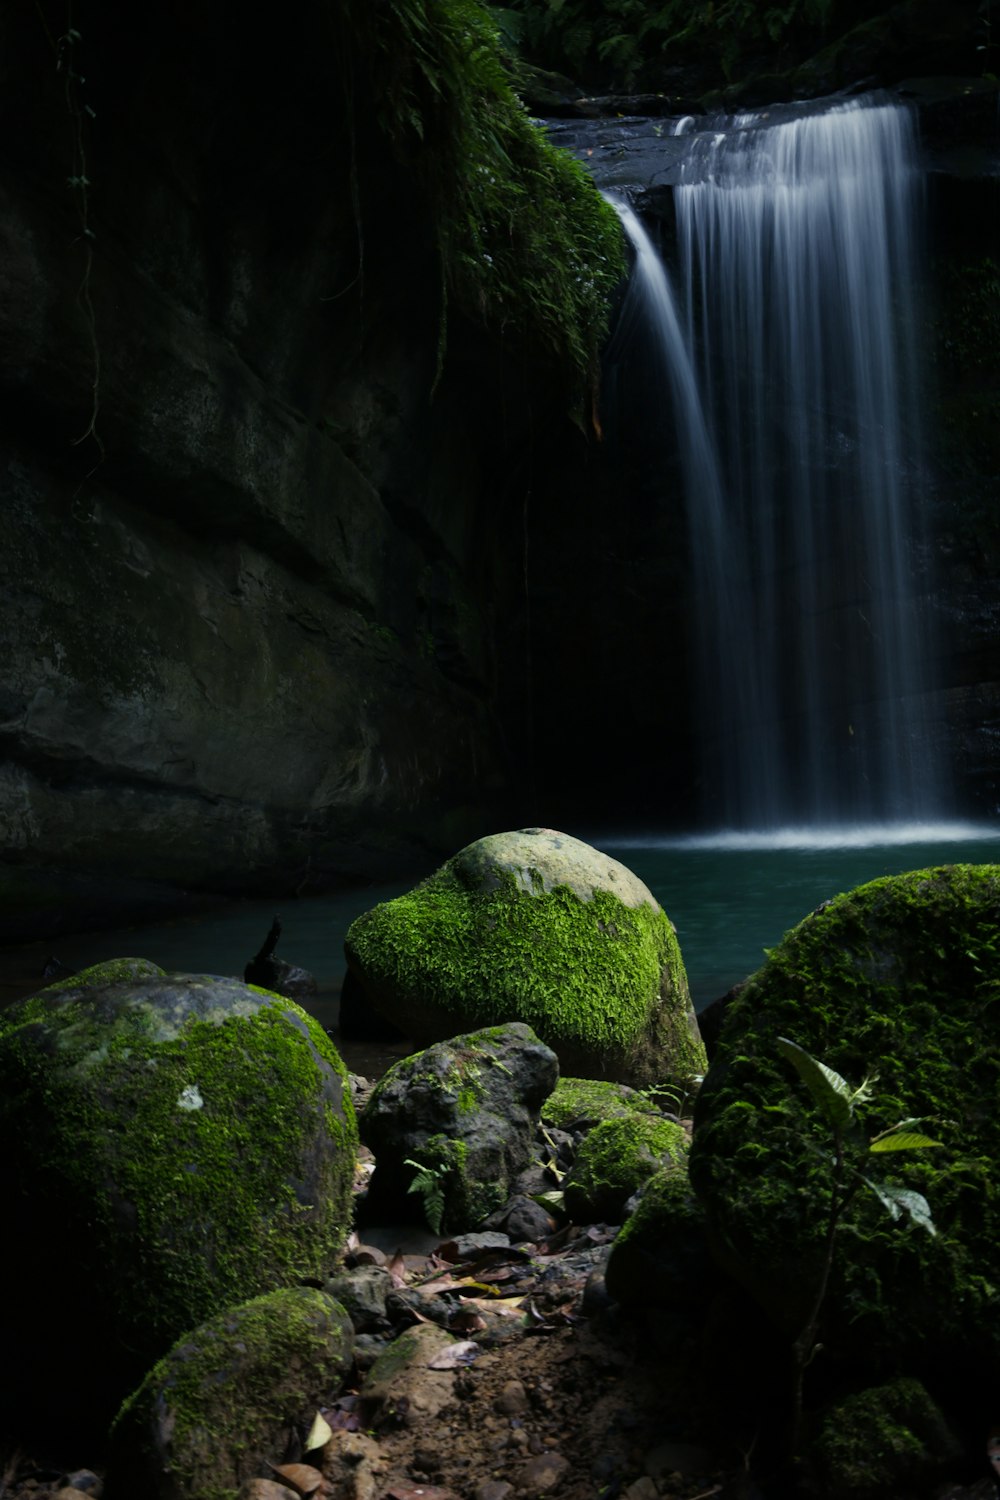 musgo verde na rocha perto de cachoeiras